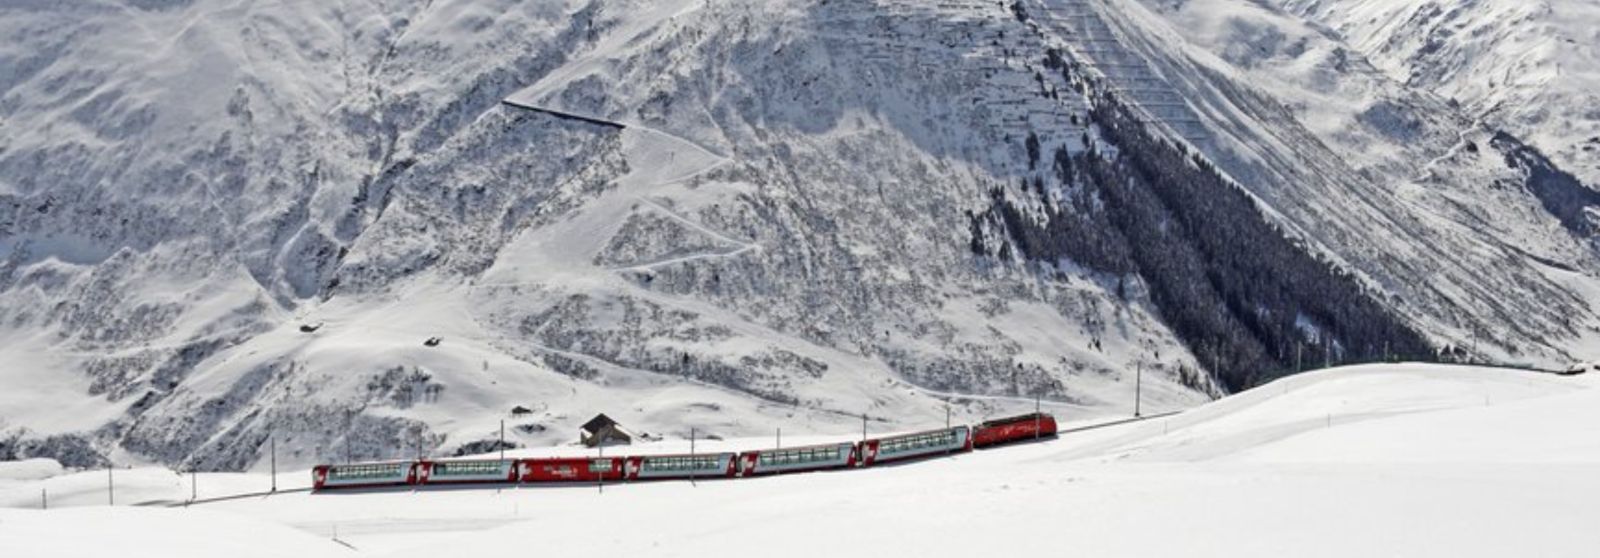 winter train journeys The Glacier Express Train in Switzerland going throug snowy mountains